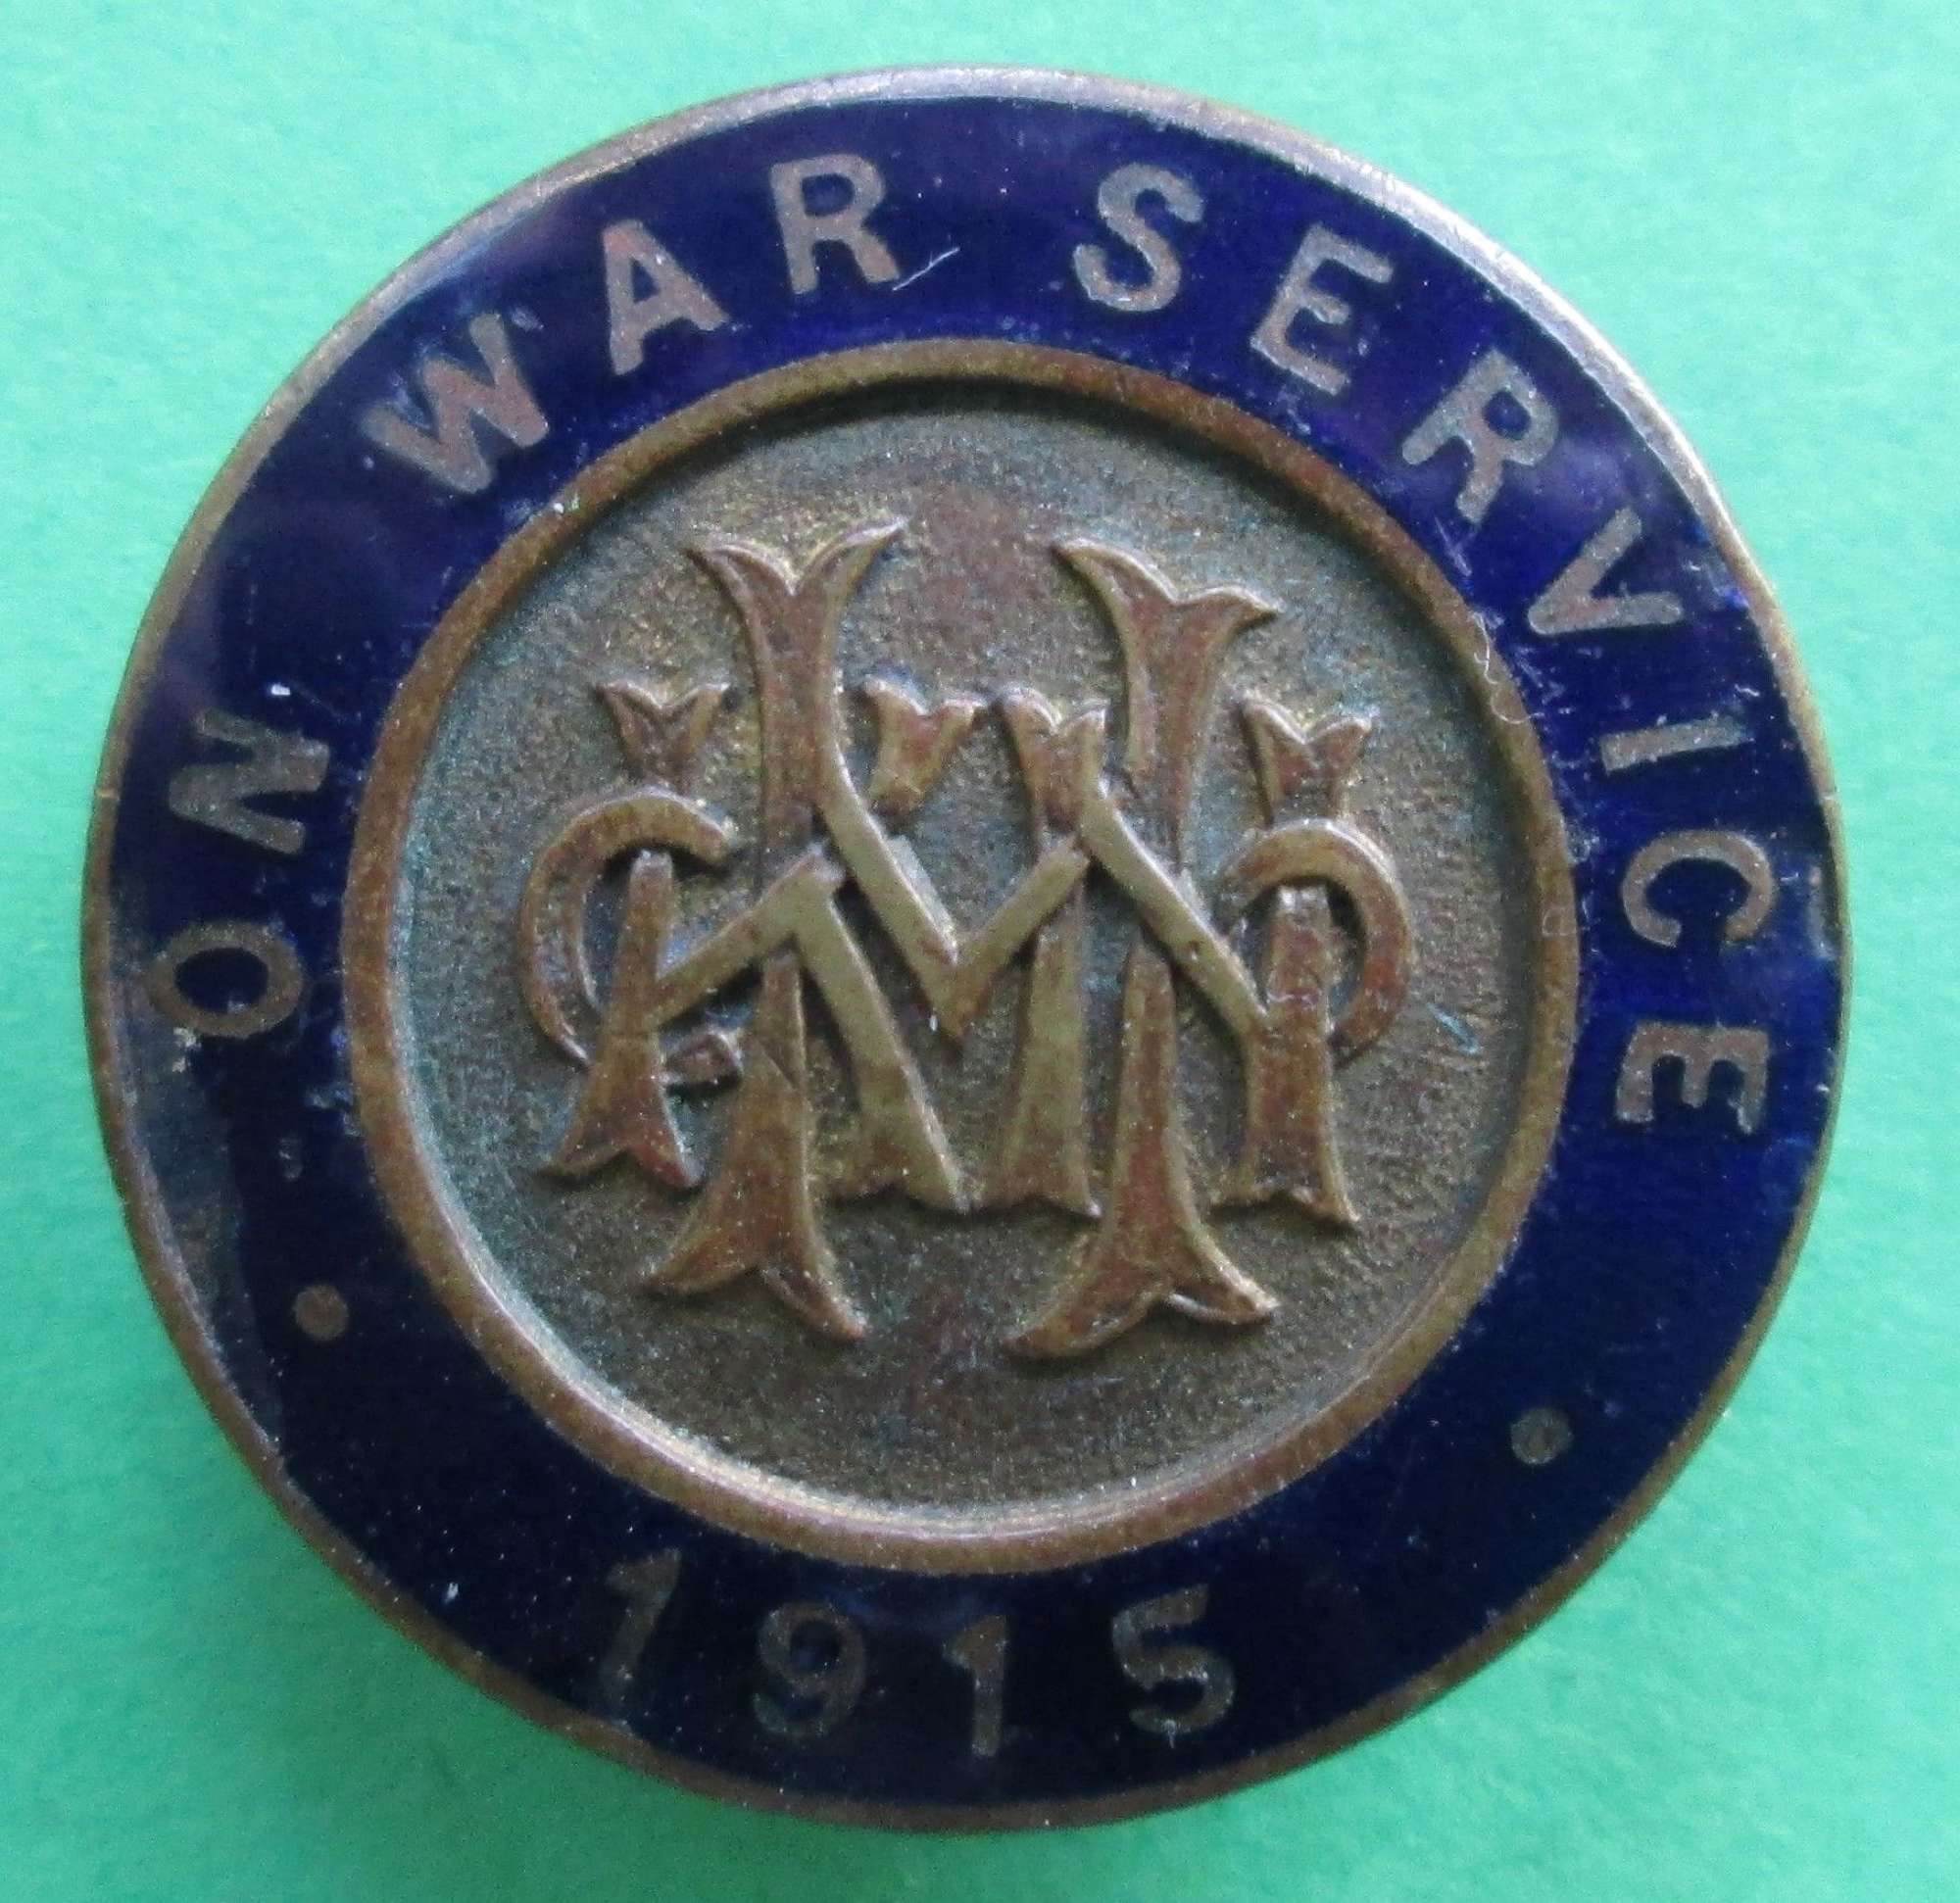 A 1915 WWI ON WAR SERVICE LAPEL BADGE